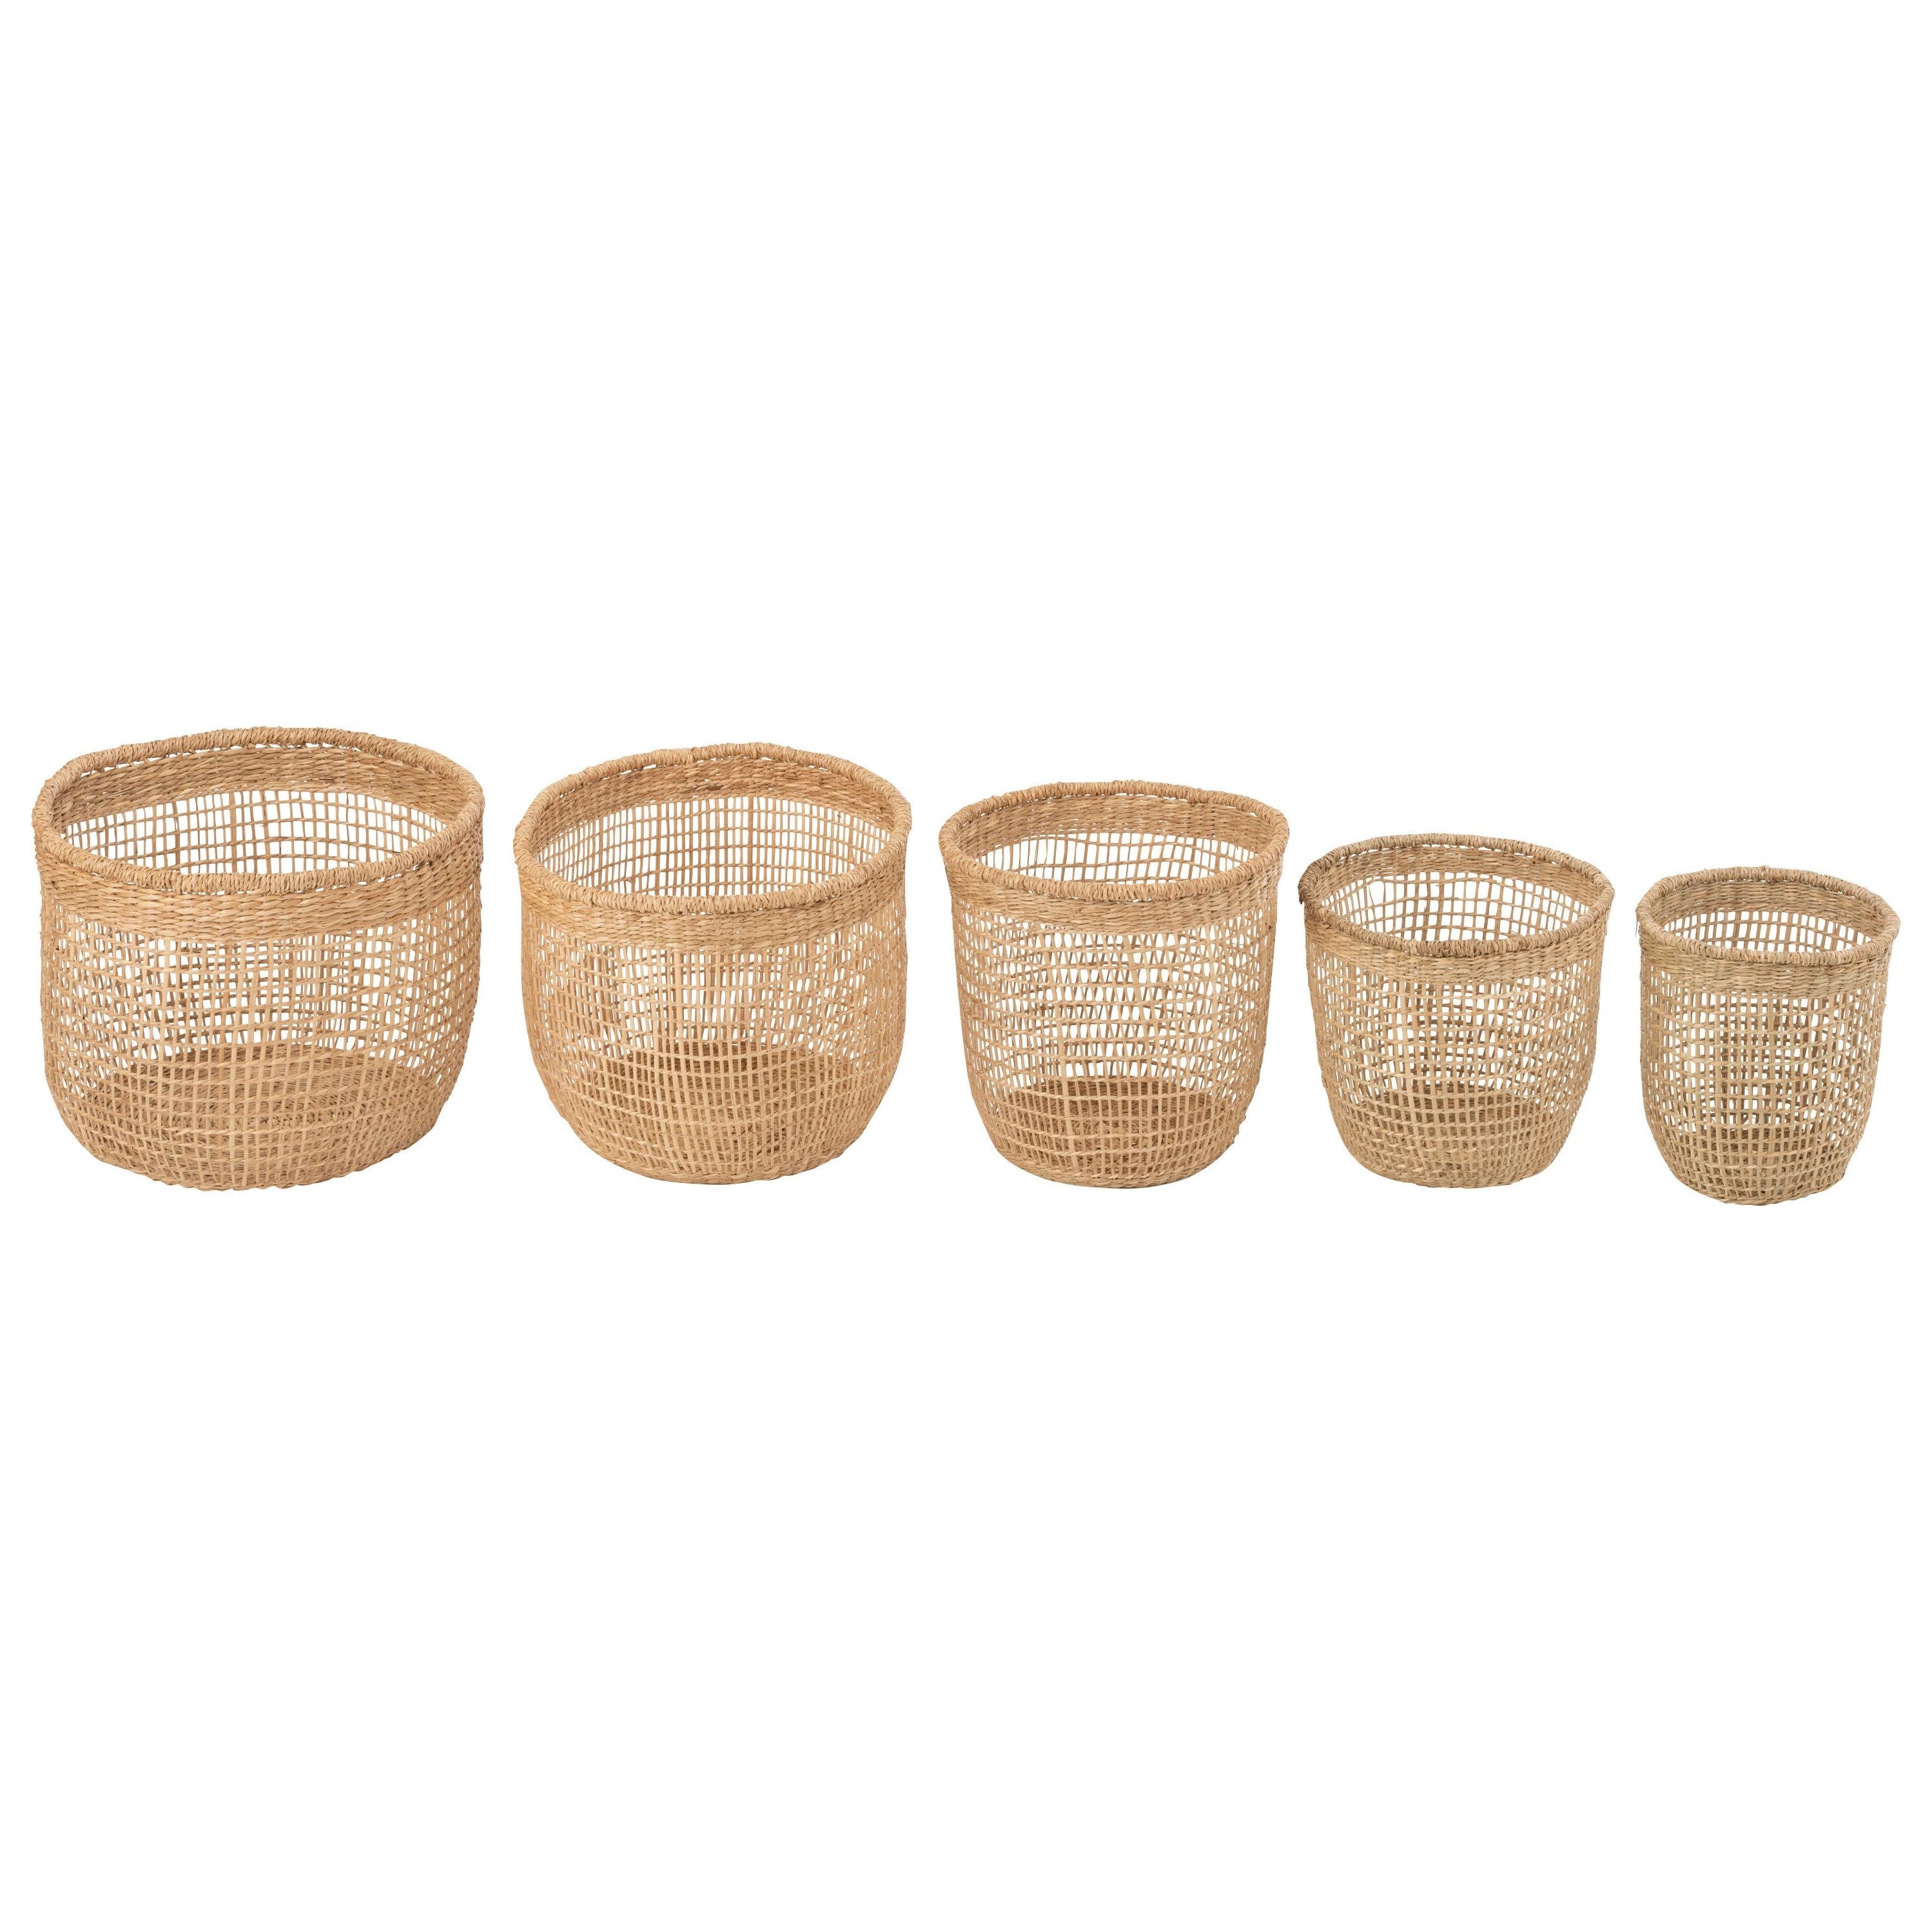 Set of 5 Baskets Oasis Seagrass Light Natural